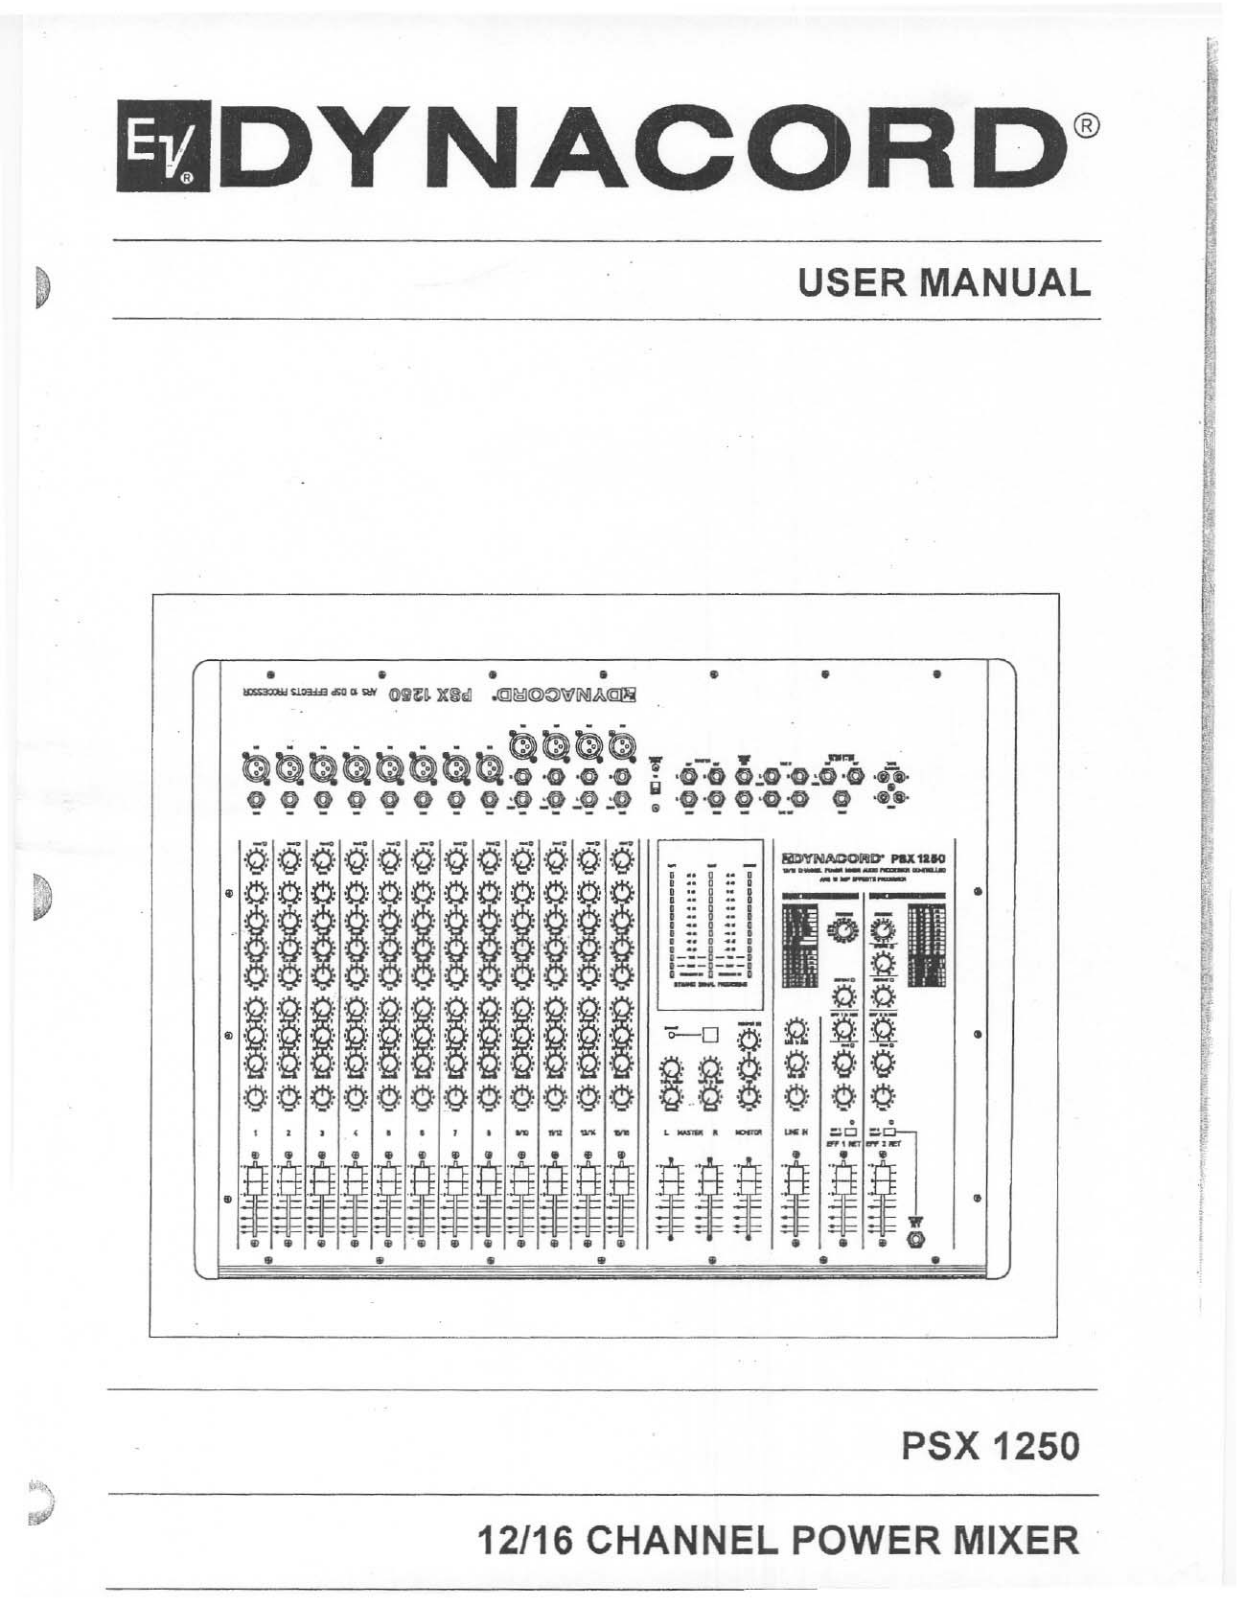 Dynacord PSX 1250 User Manual